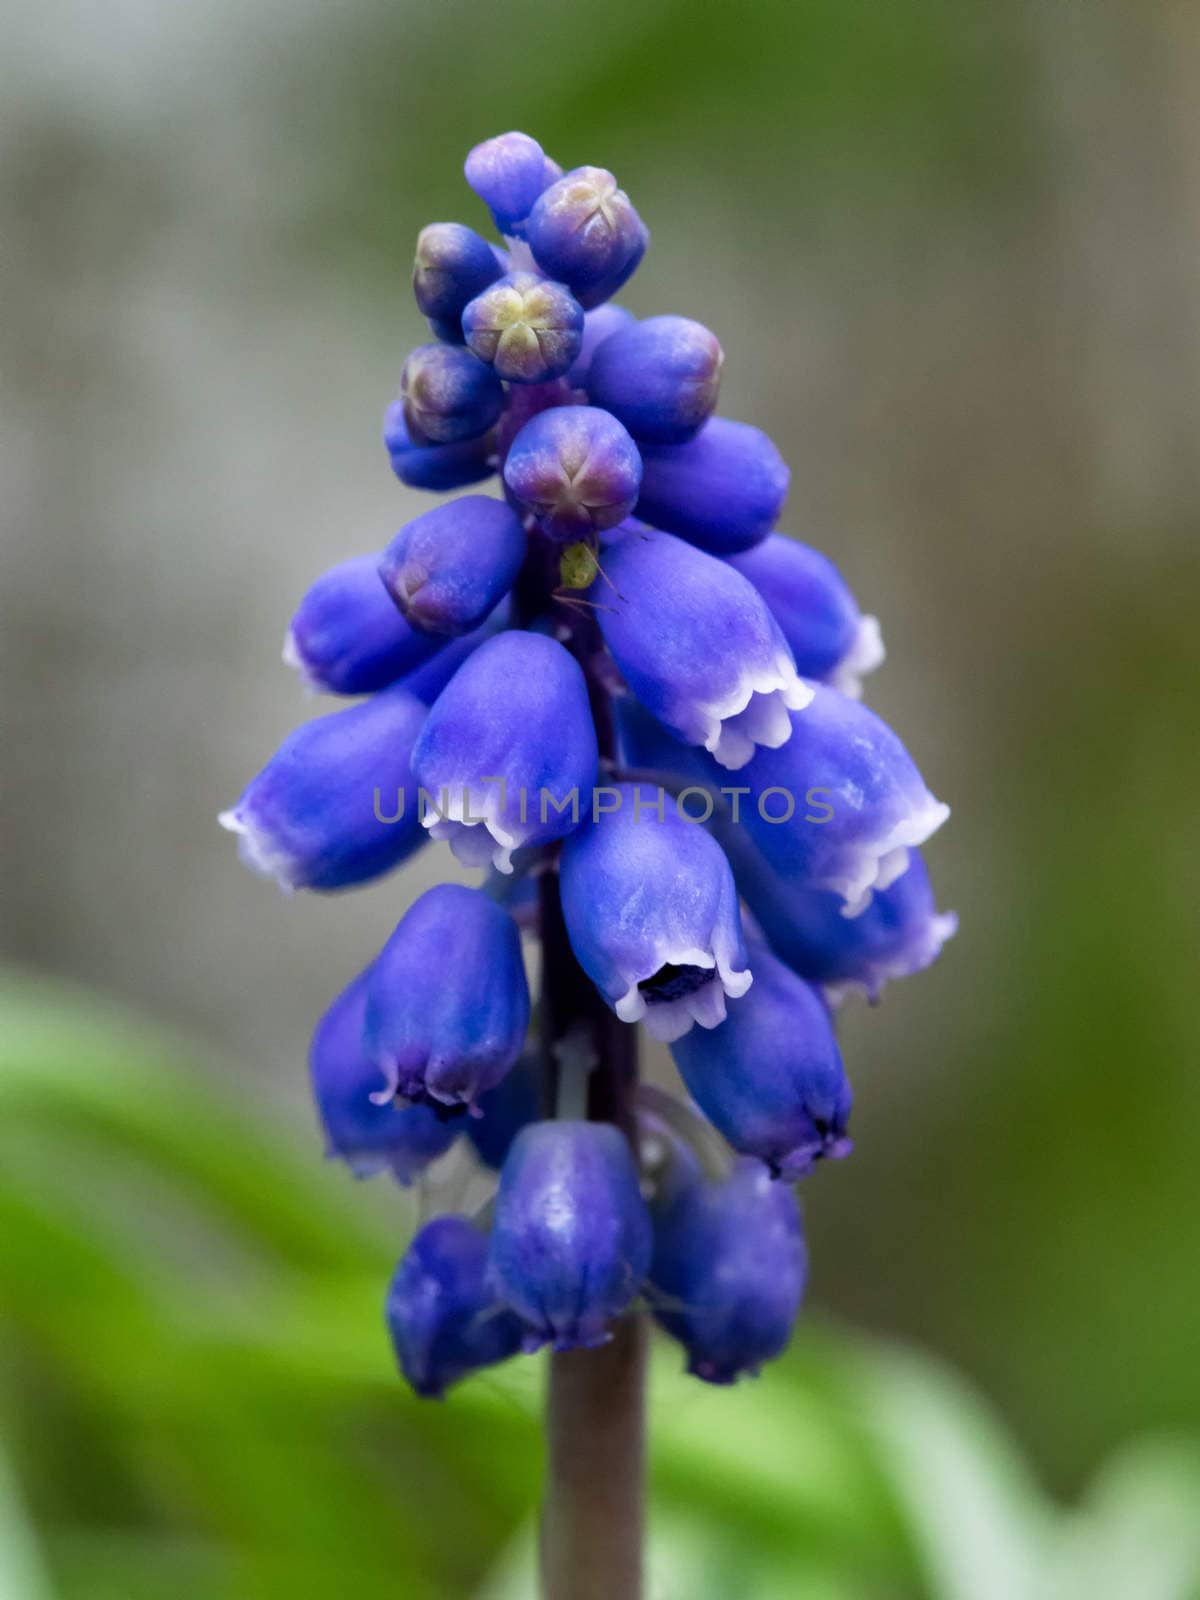 Muscari - Blue Grape Hyacinth Close-up / macro shot on a blurry green background